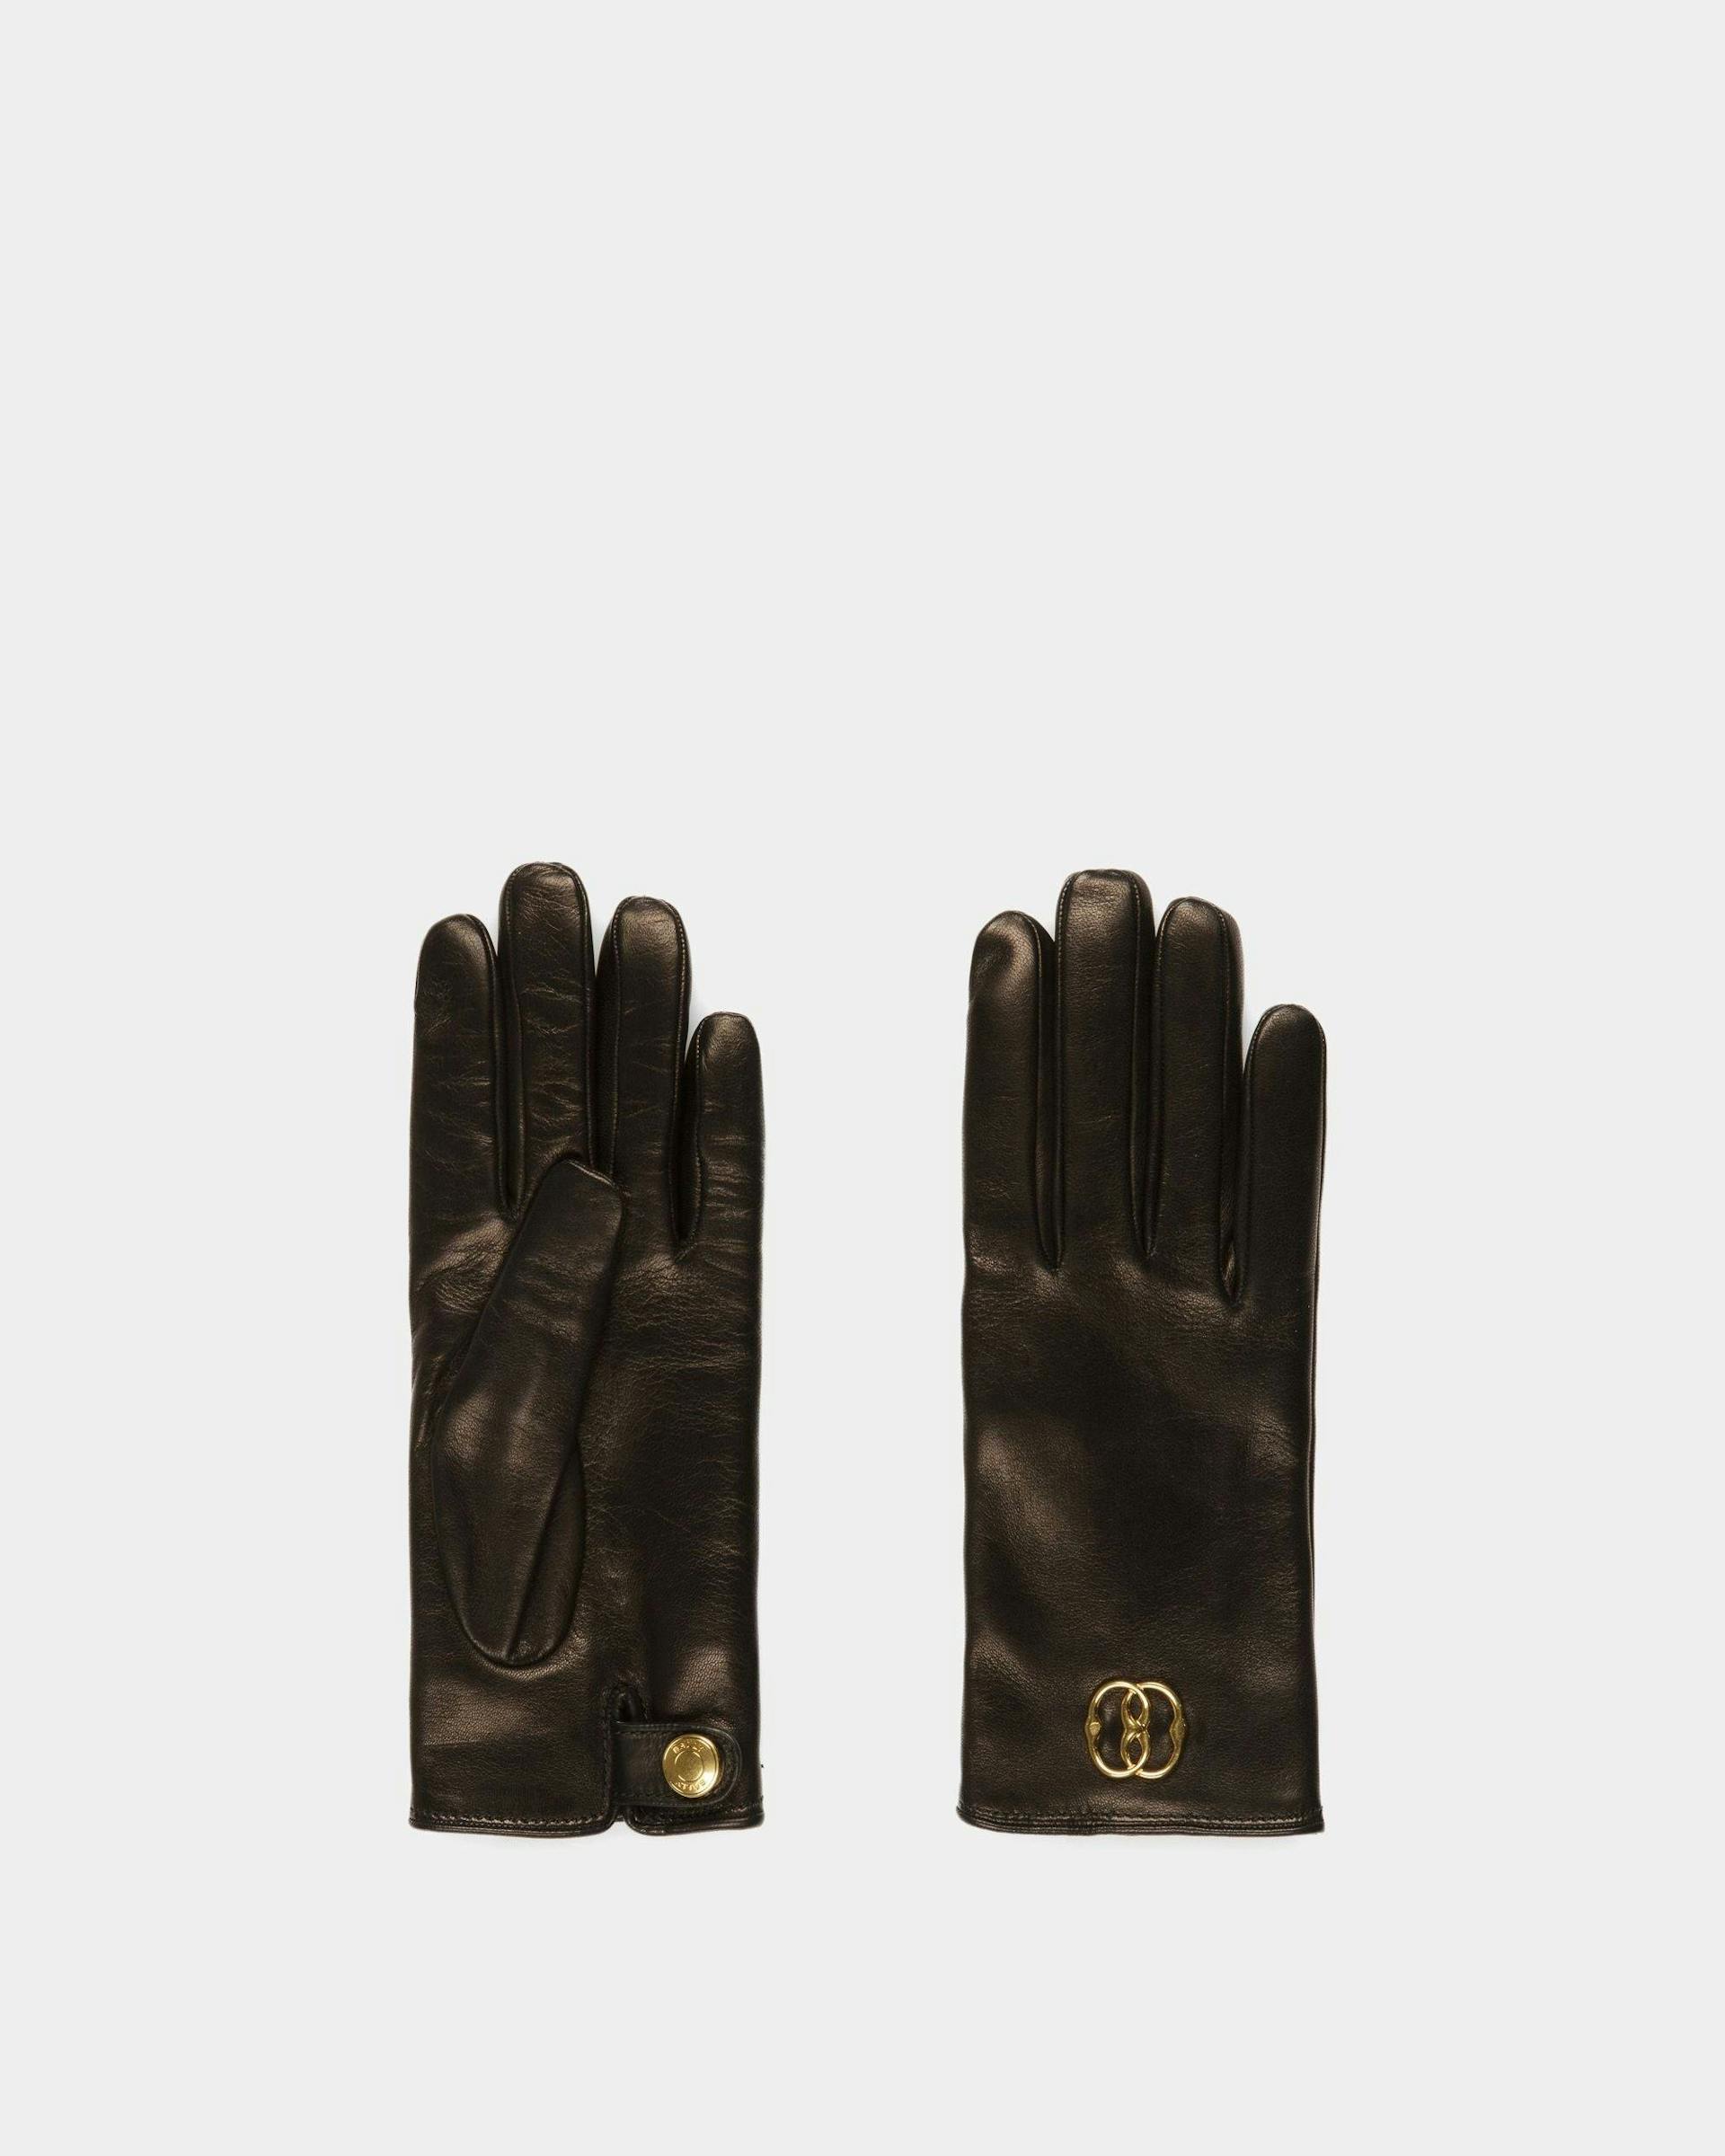 Emblem Handschuhe Aus Leder In Schwarz - Damen - Bally - 01